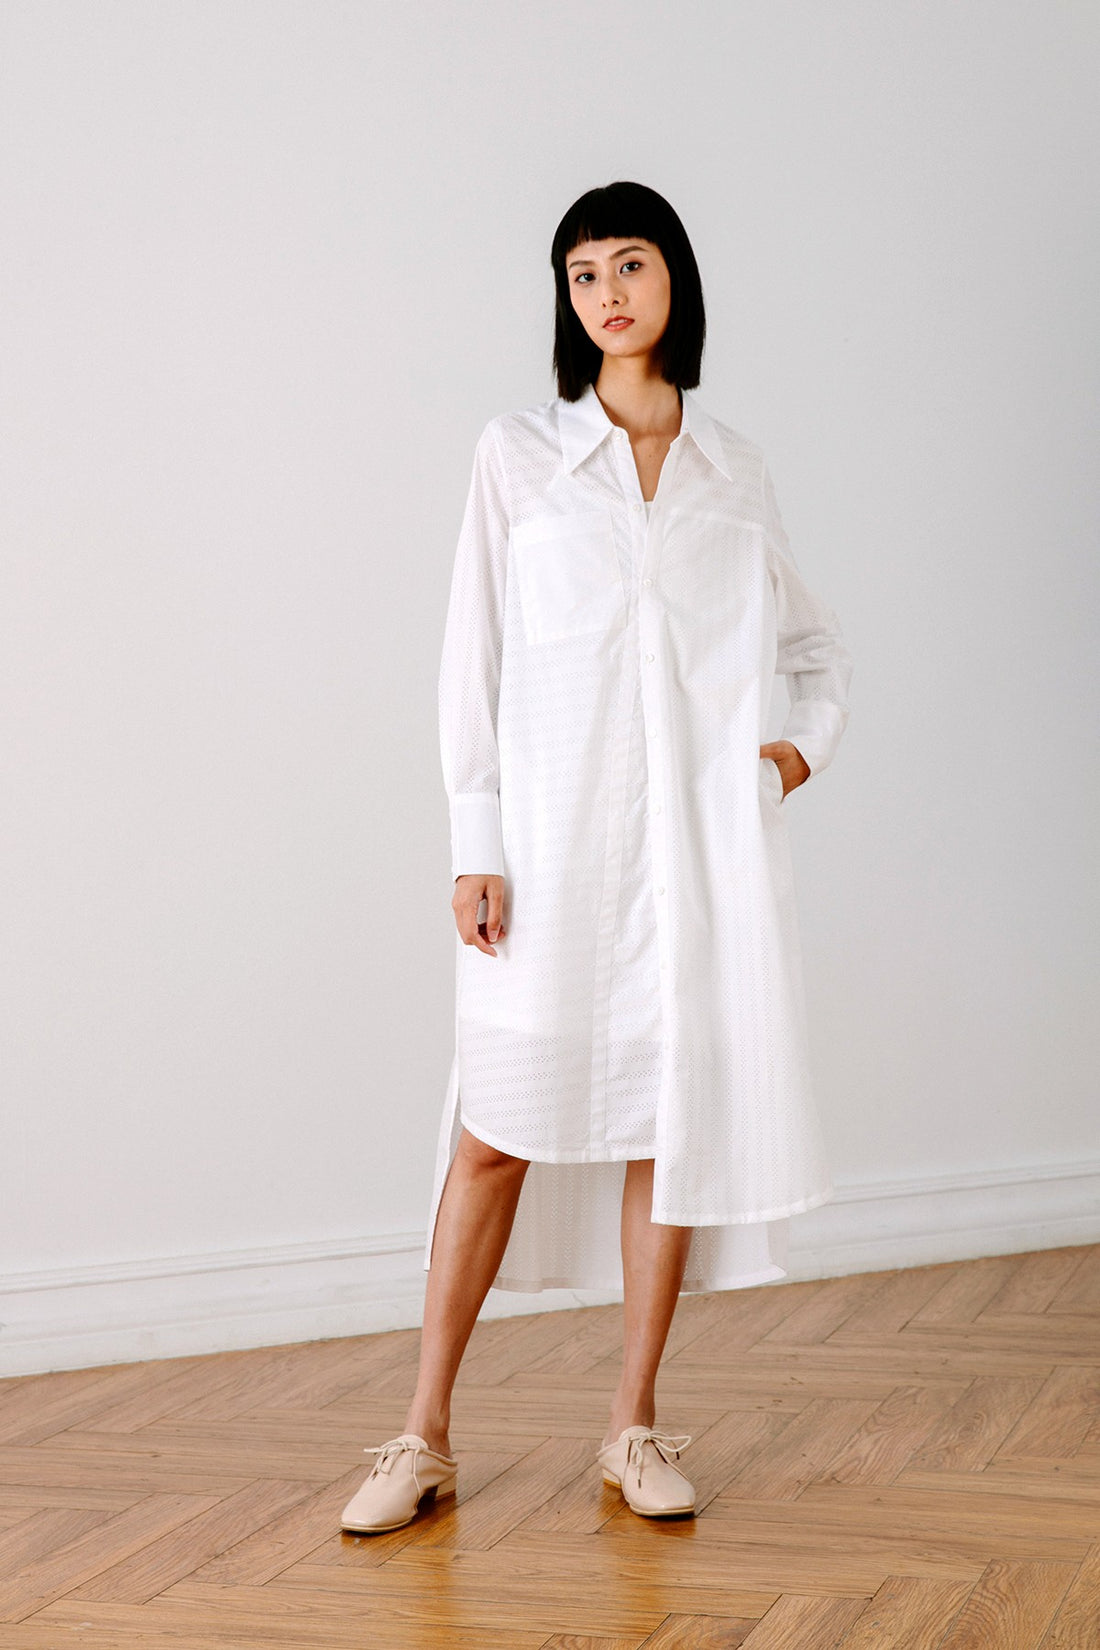 SKYE San Francisco SF California shop ethical sustainable modern chic minimalist luxury clothing women fashion Olivia Shirt Dress white 2